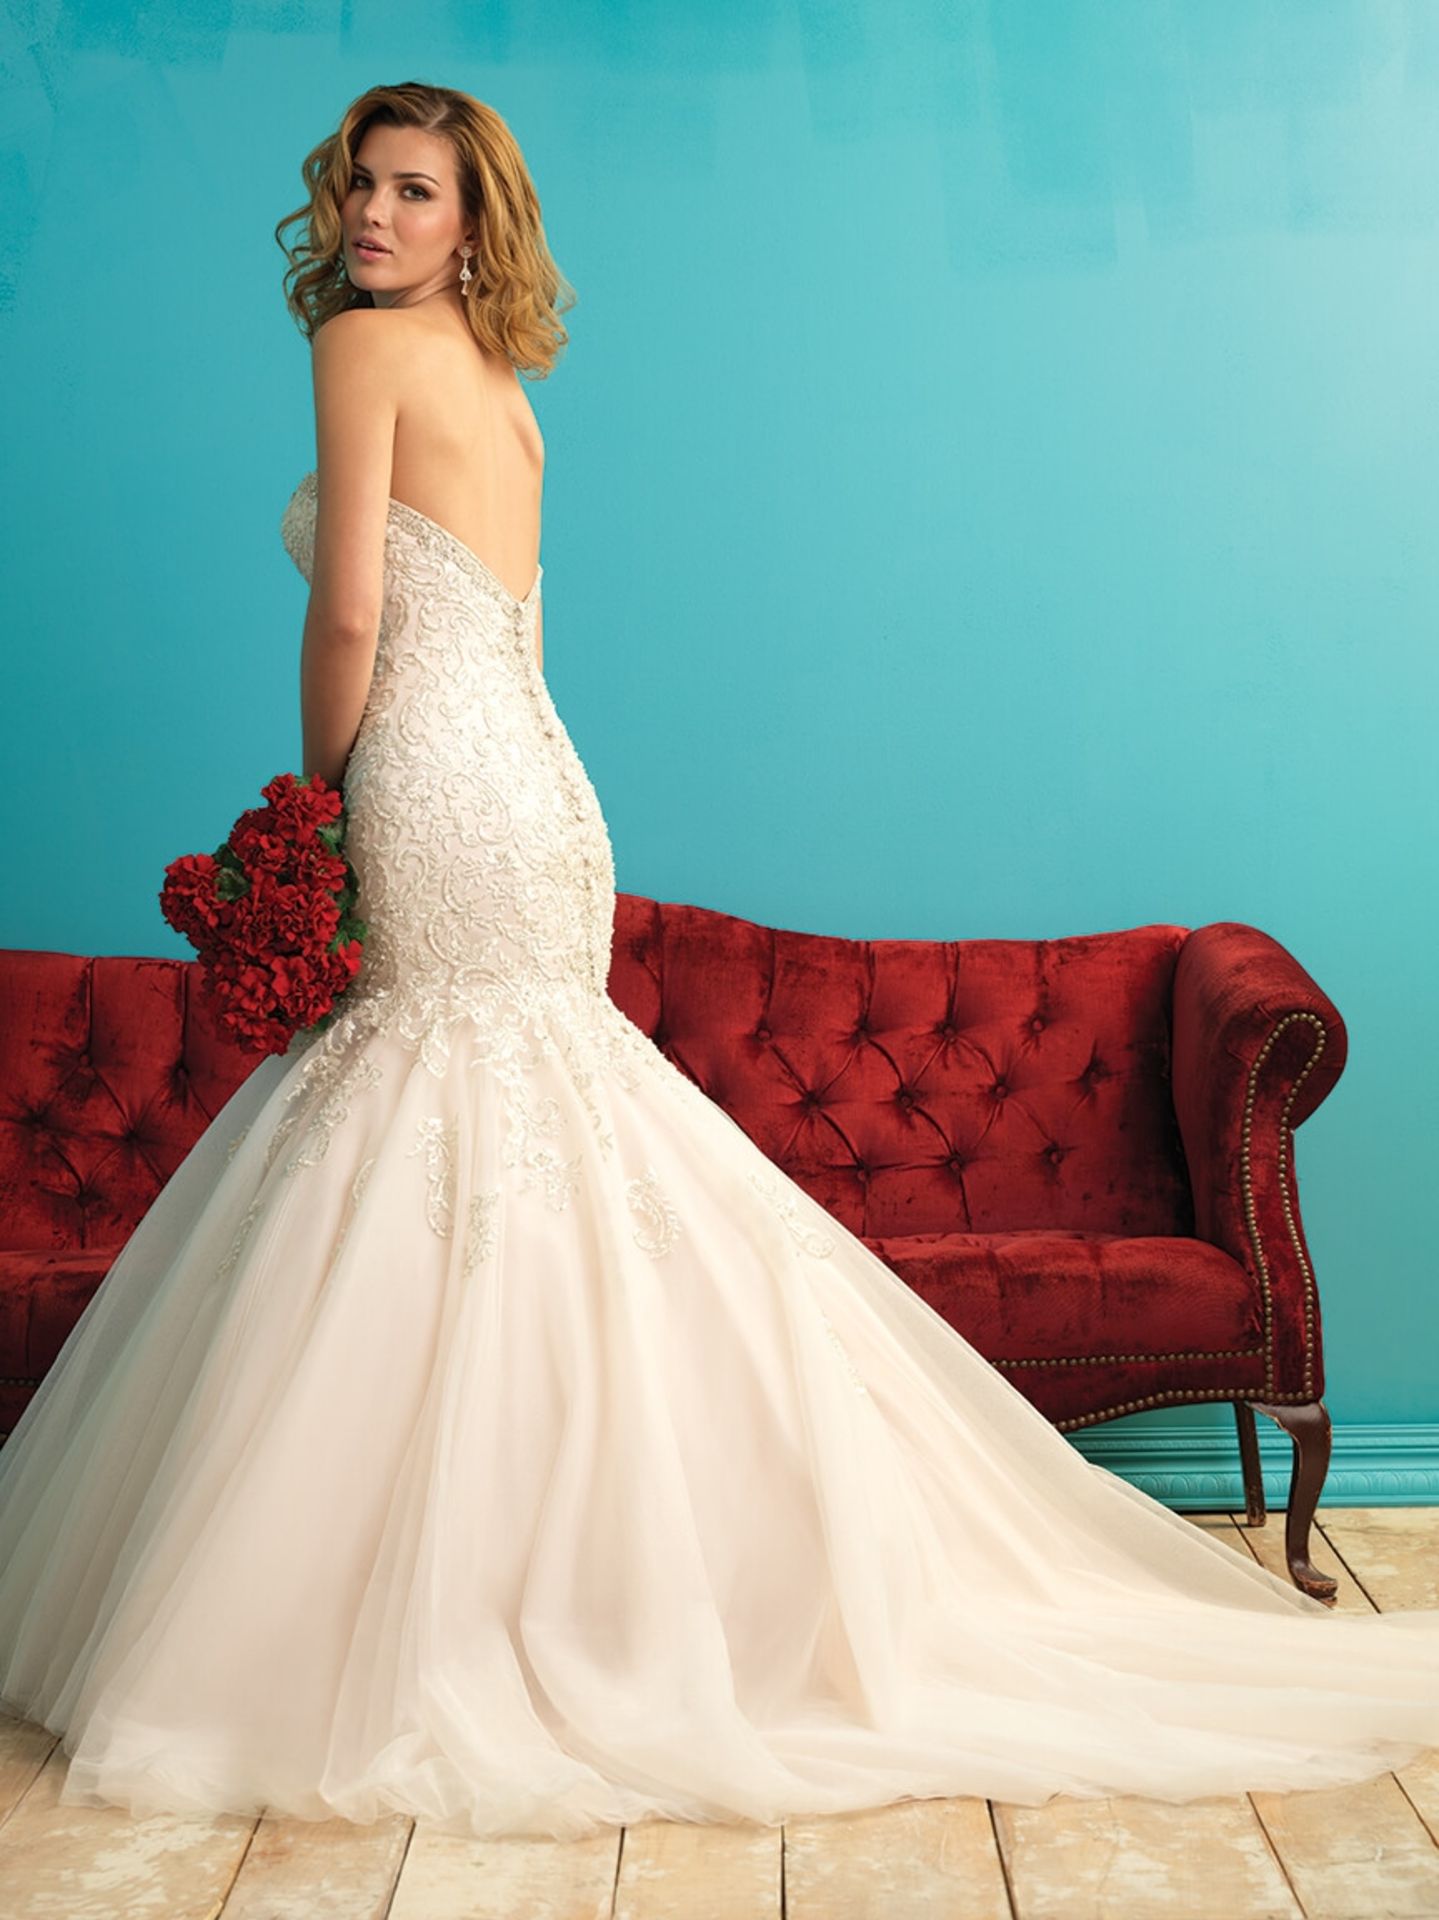 1 x ALLURE '9275' Timeless Strapless Lace And Chiffon Mermaid Designer Wedding Dress RRP £2,250 UK12 - Image 2 of 11